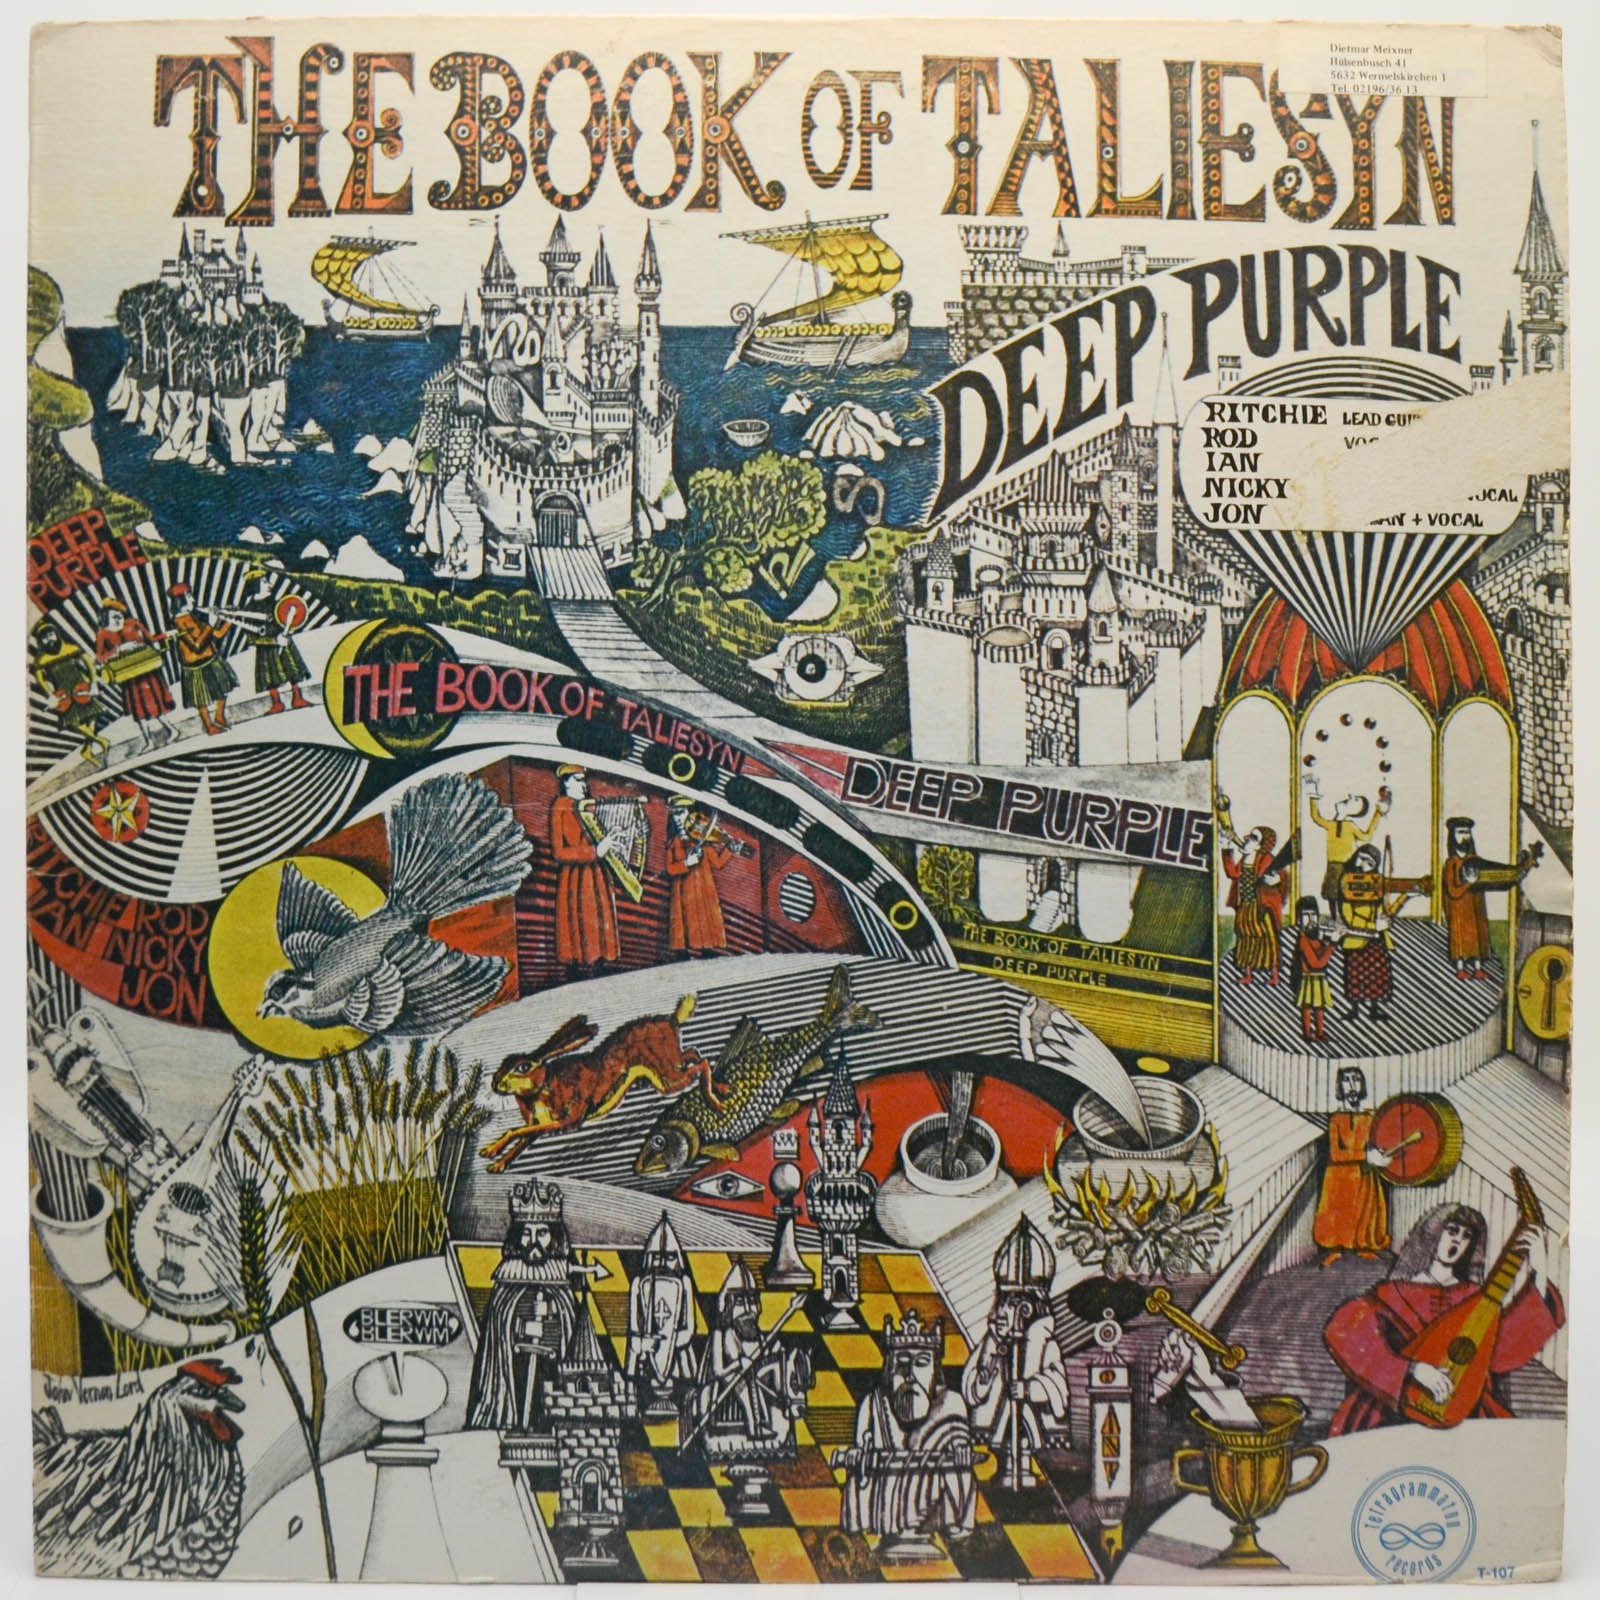 Deep Purple — The Book Of Taliesyn (USA), 1968